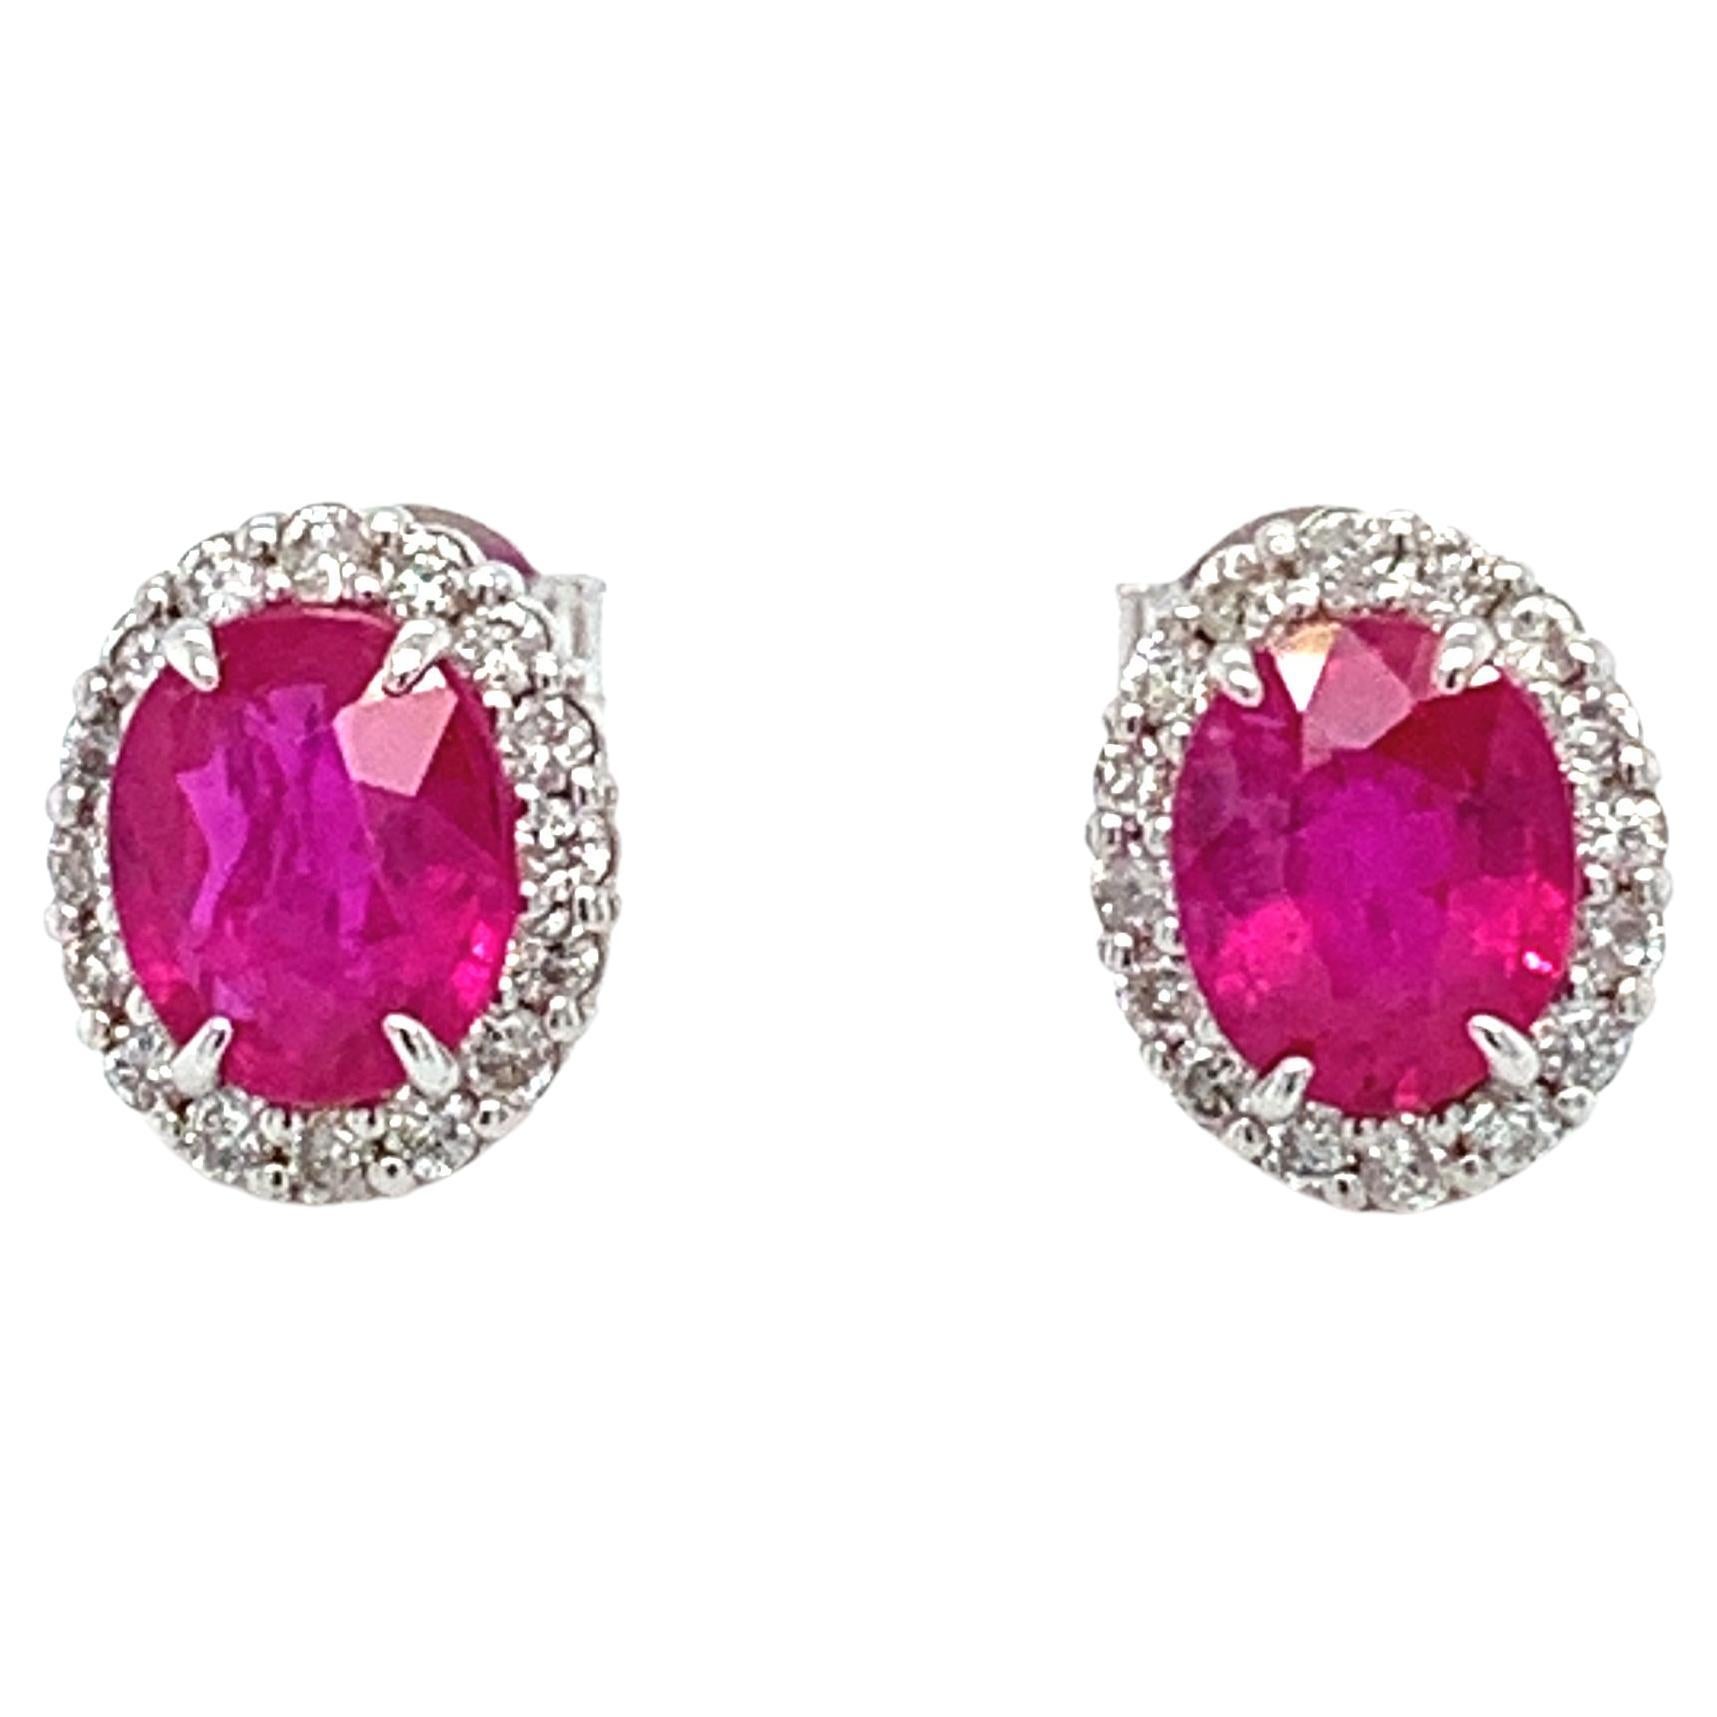 Ruby diamond halo art deco studs earrings 18k white gold